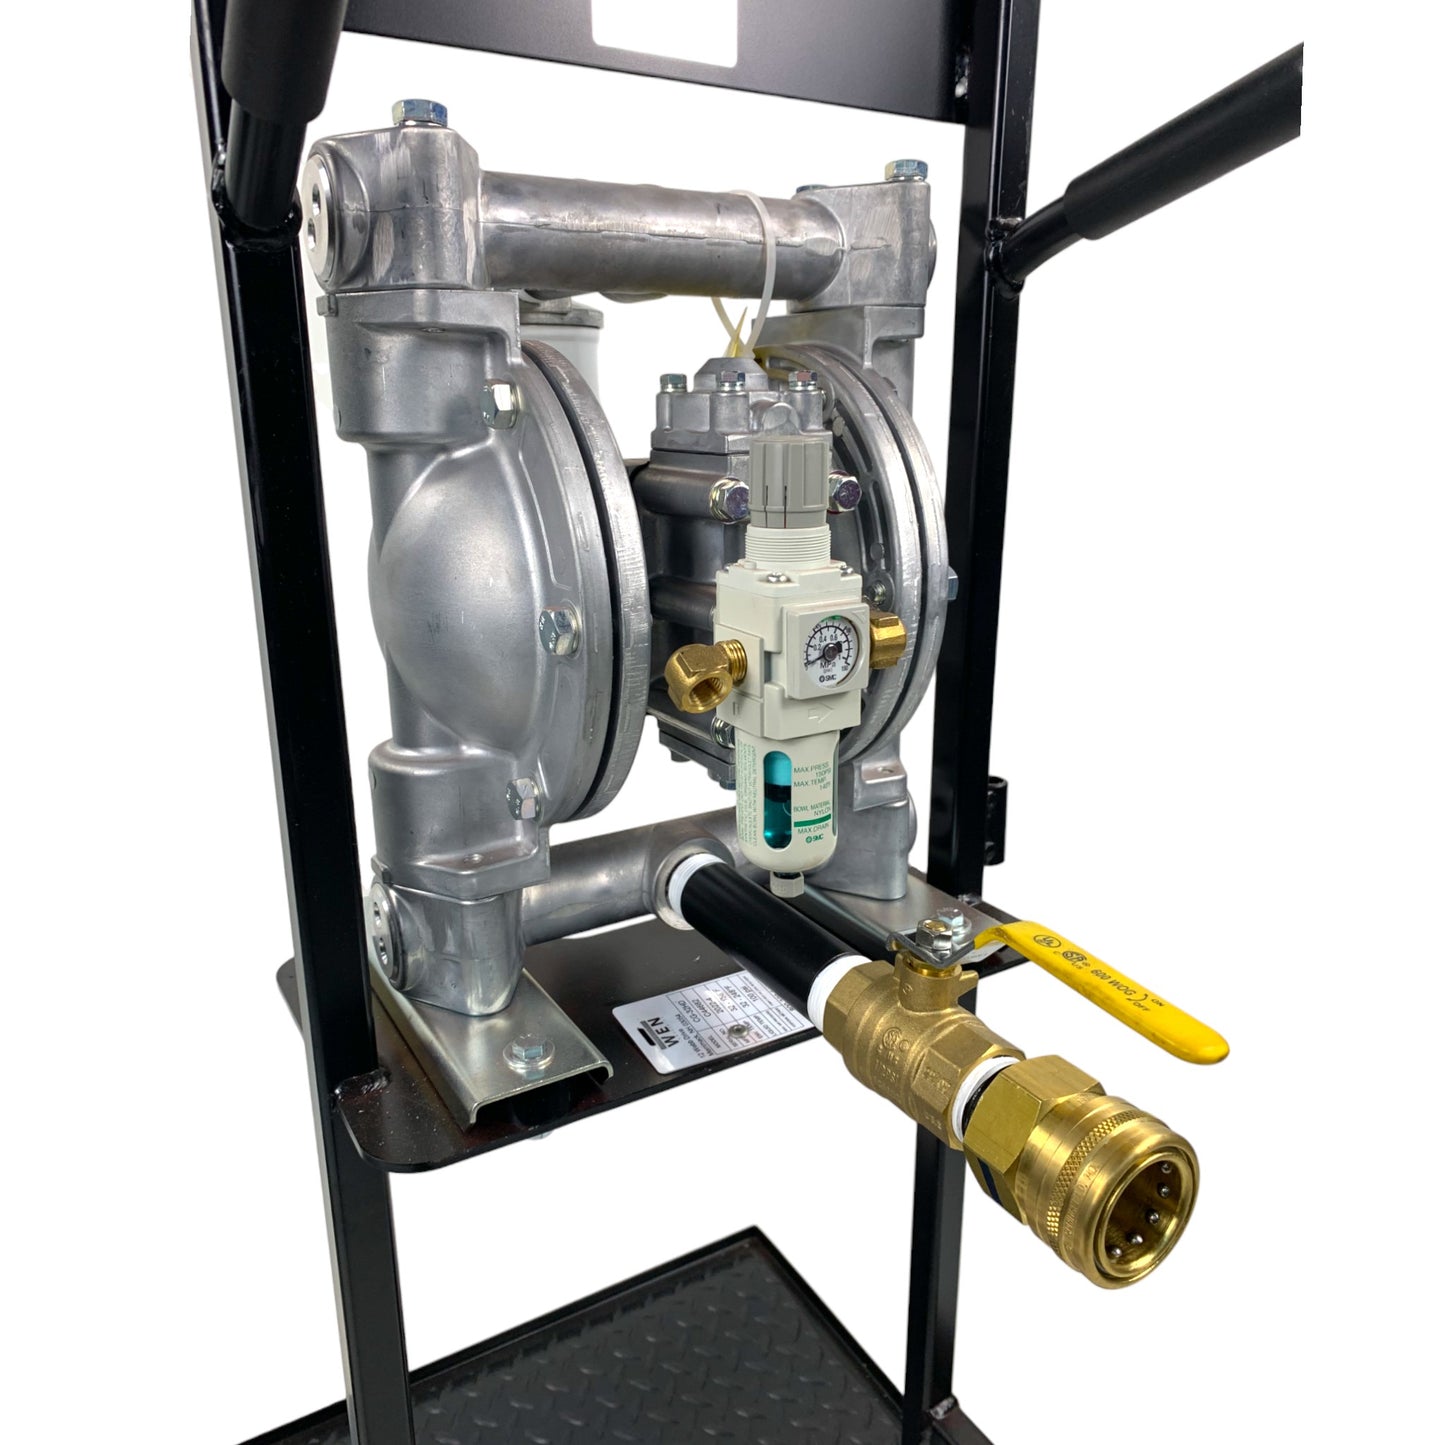 WEN104TS Accelerator Mobile Fluid Transfer System with 1" Heavy Duty Diaphragm Air Pump - Hydraulic Fluid